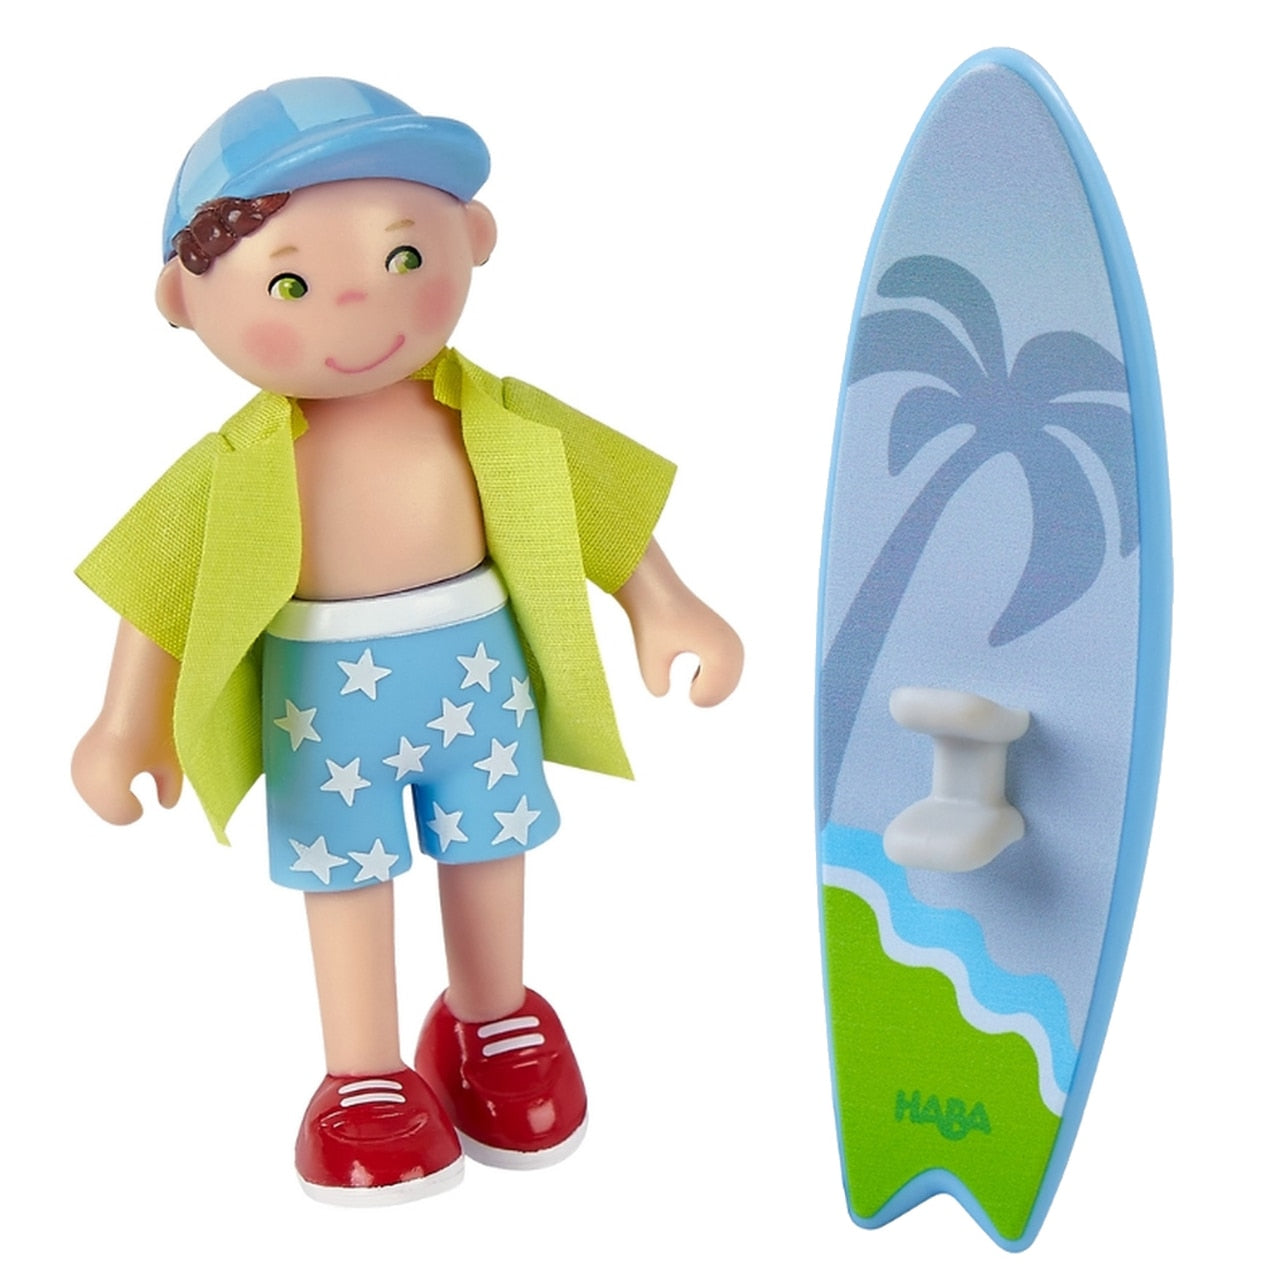 Little Friends: Colin the Surfer